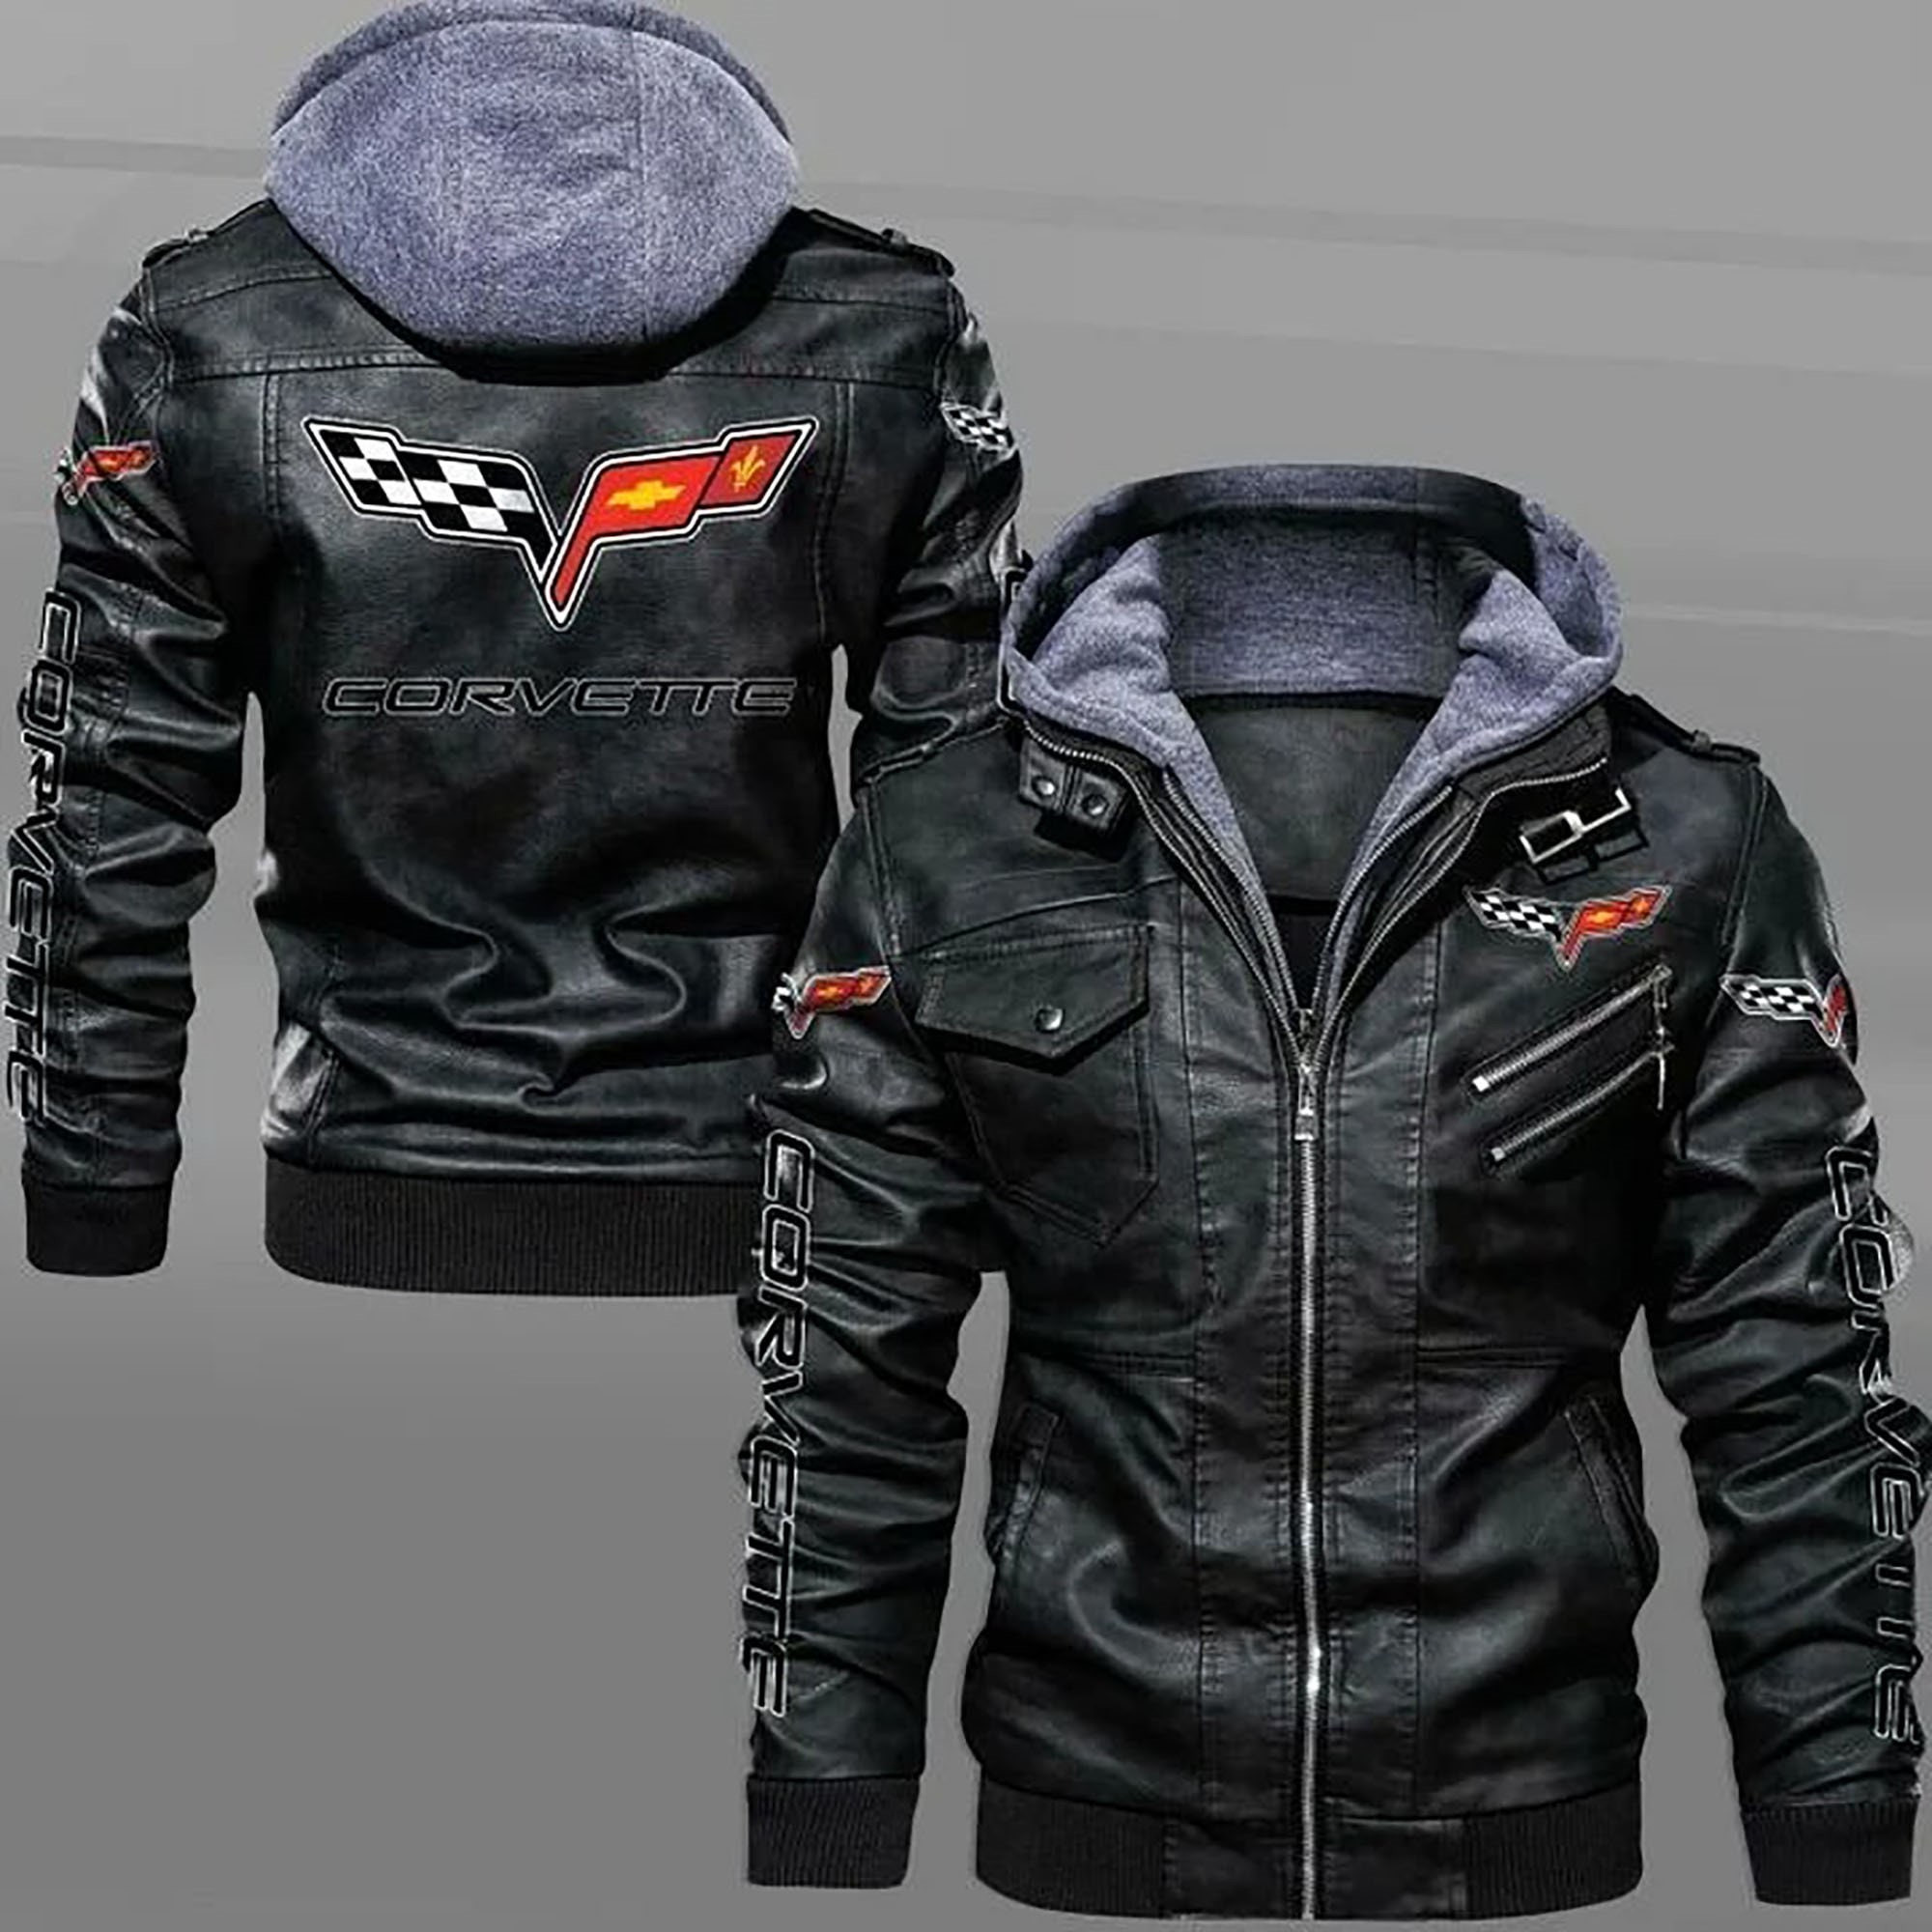 Choosing Leather Jacket that looks good on you below 213